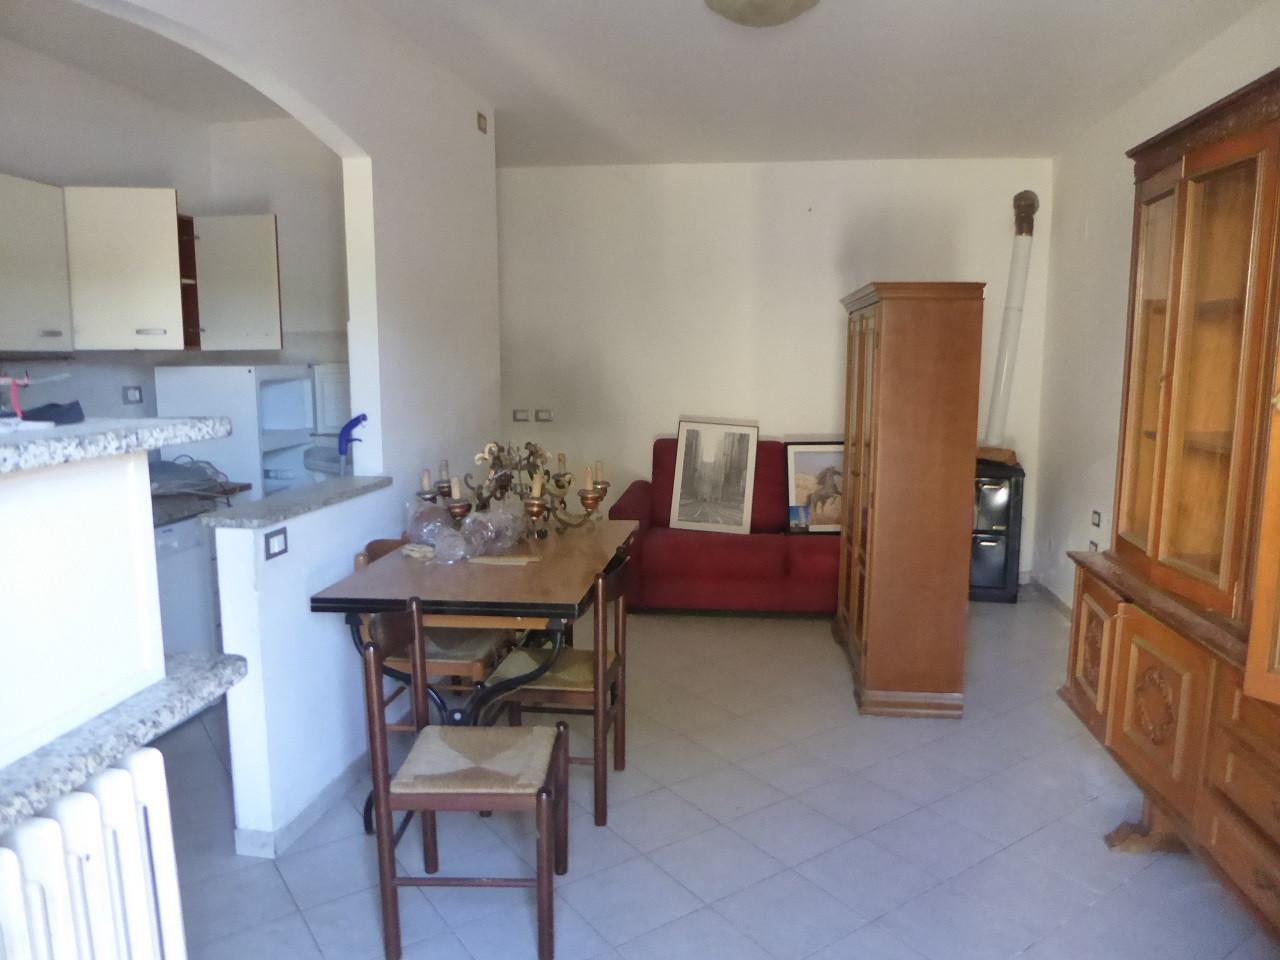 Apartment for sale in Cascina (PI)